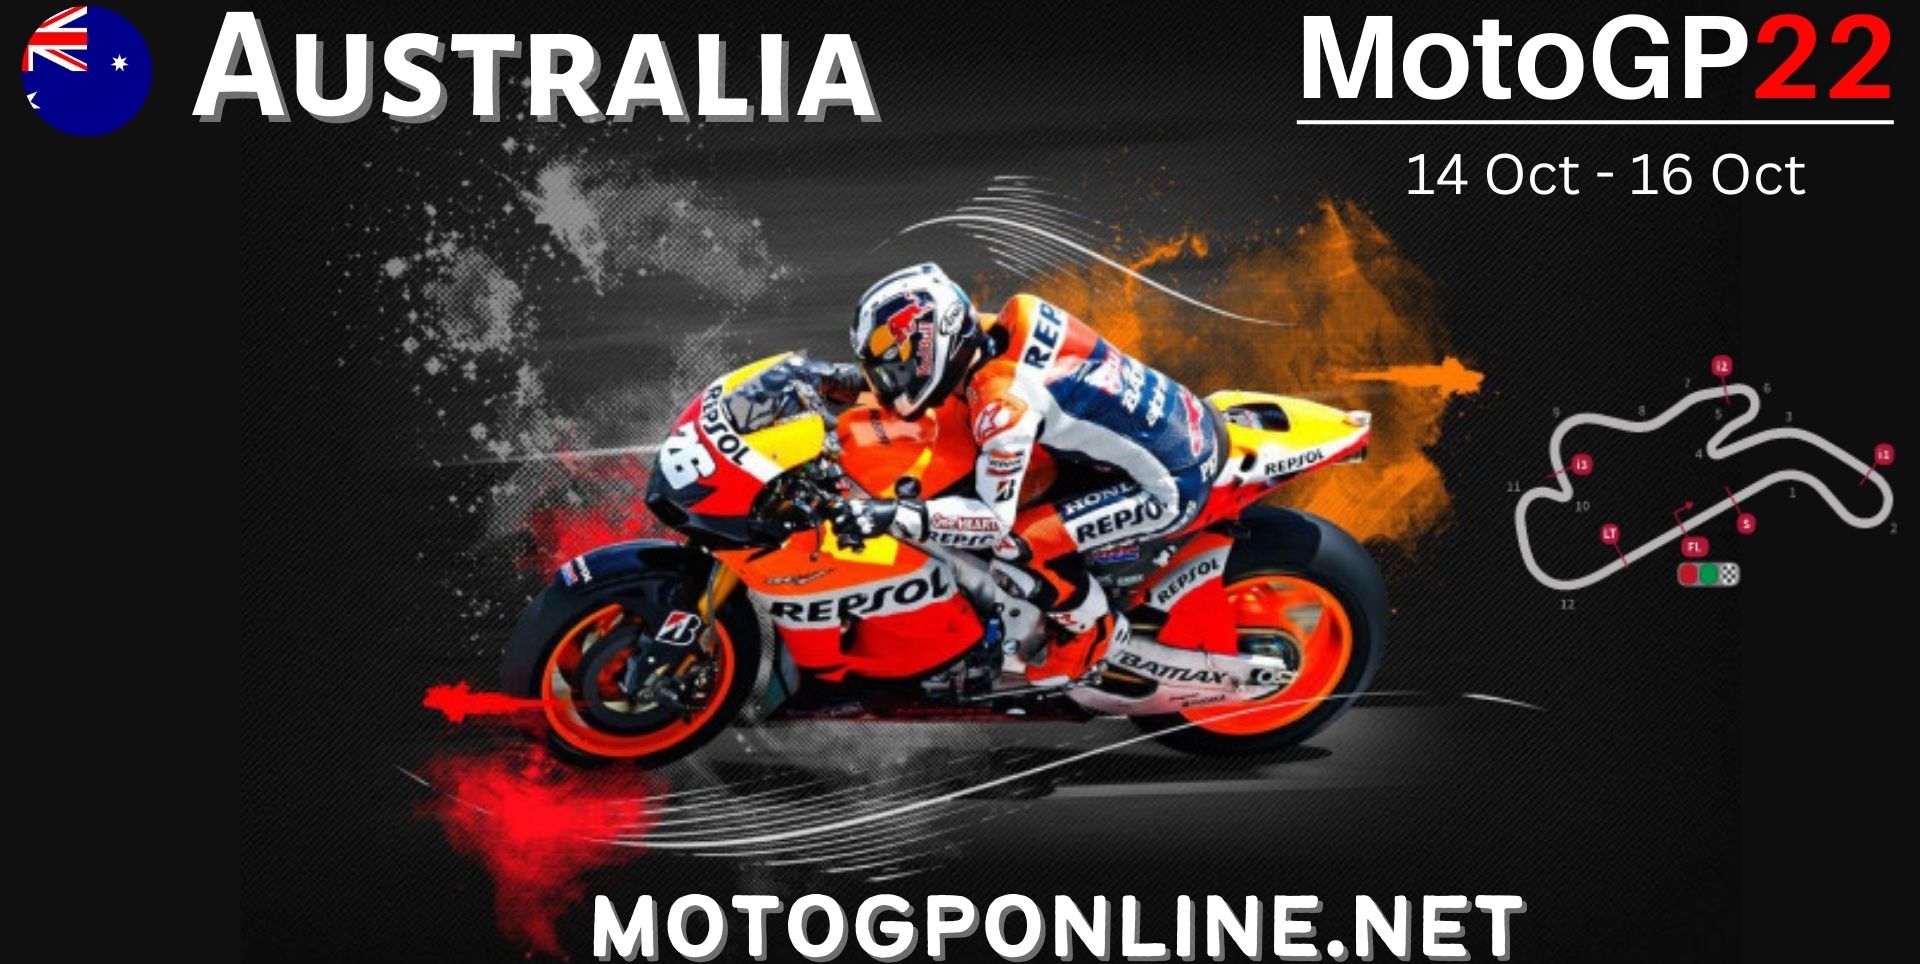 2018 Australian MotoGP Live Stream